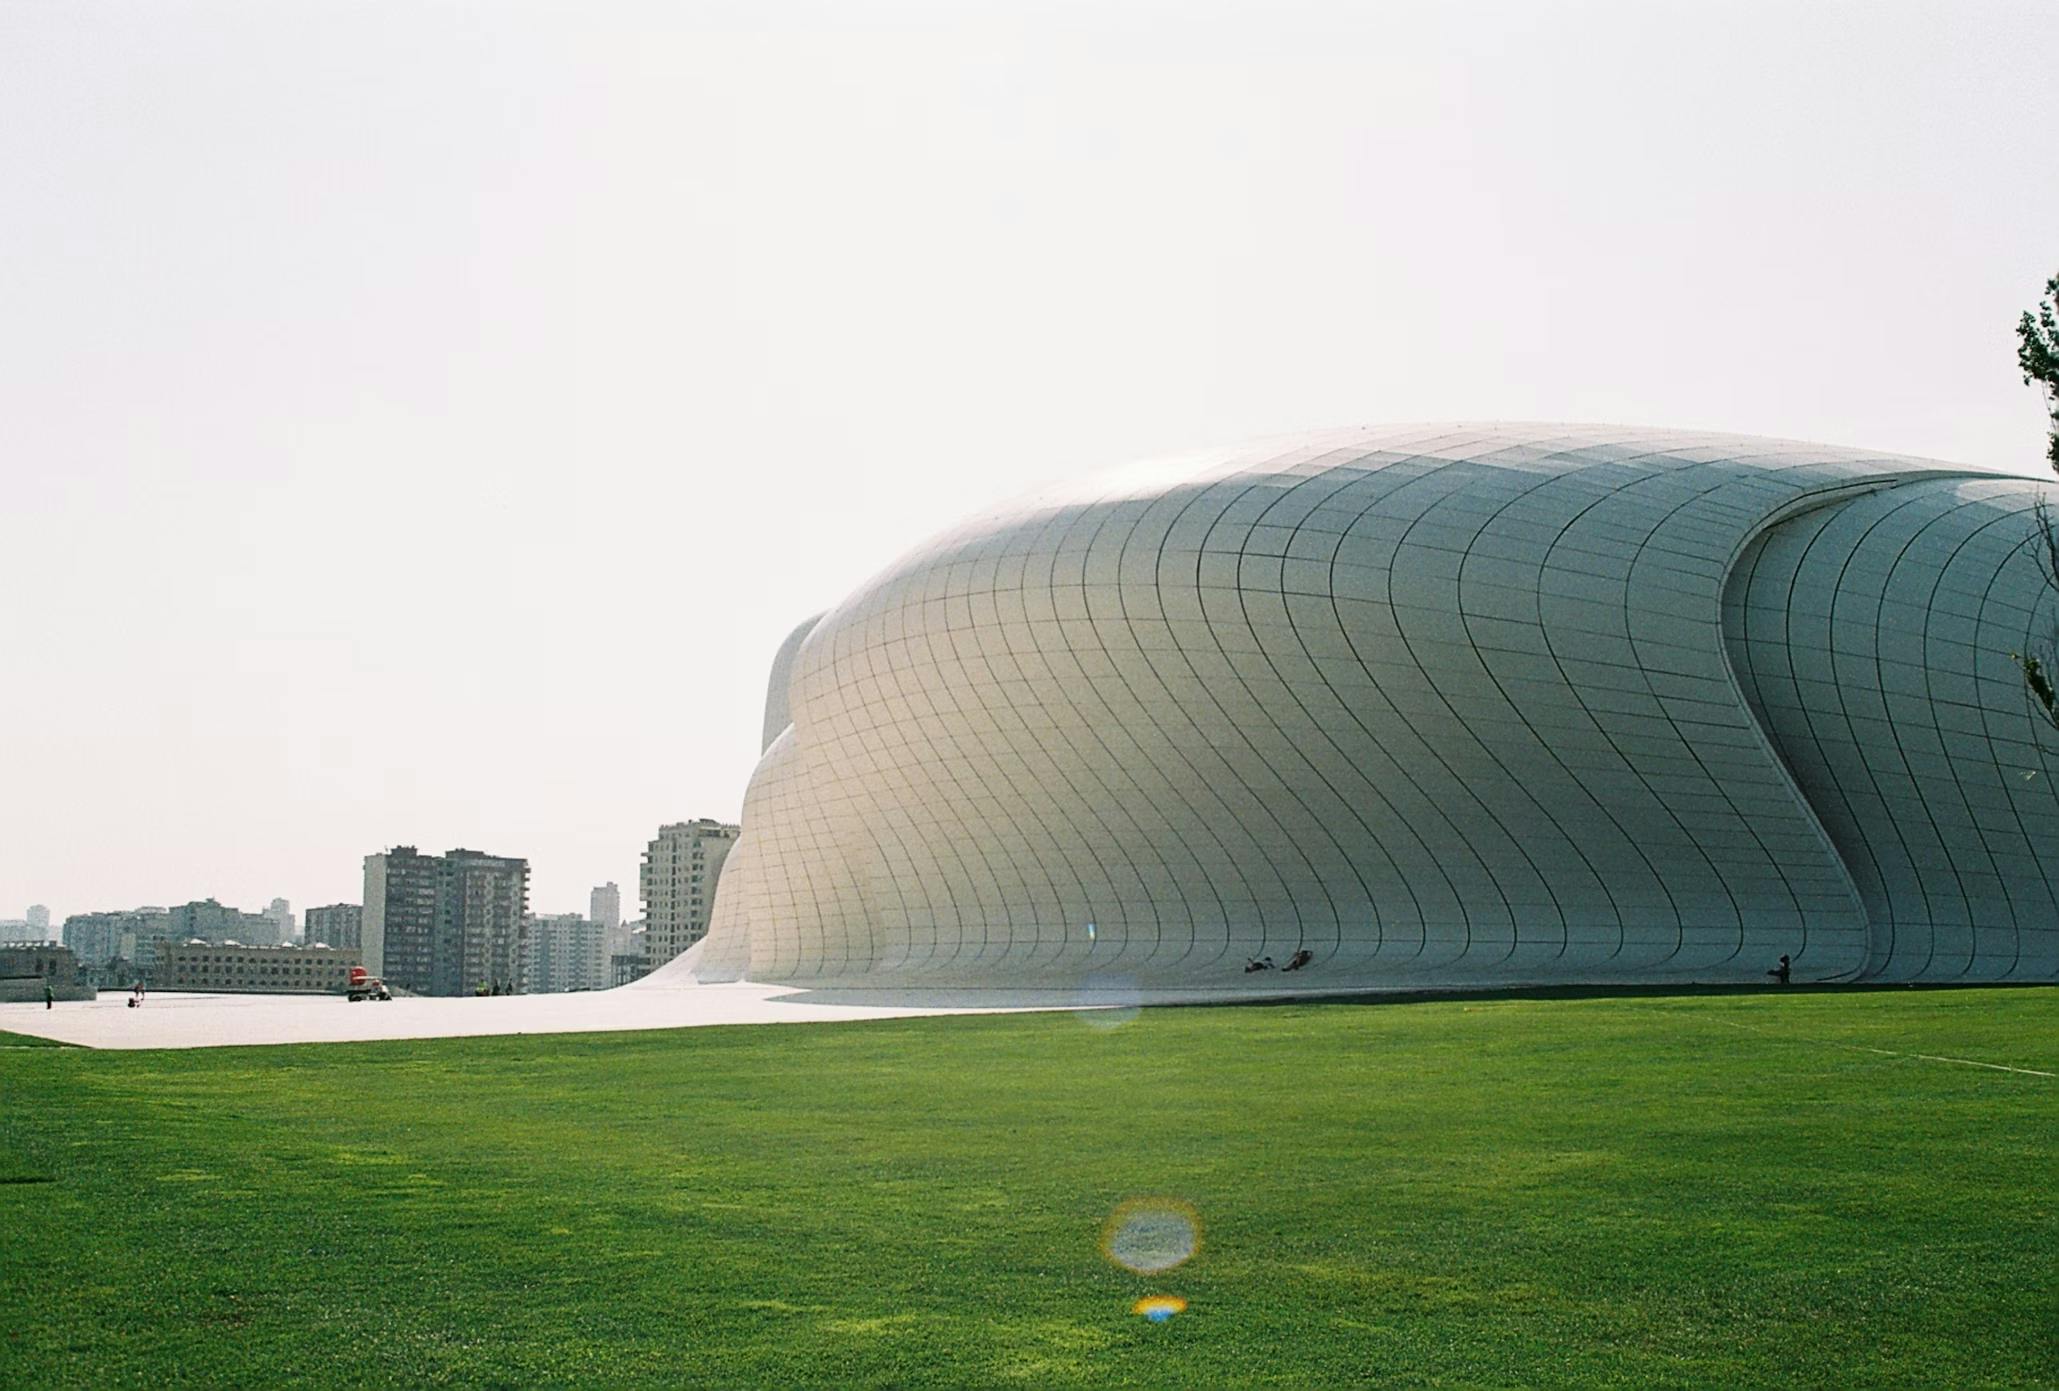 The iconic Heydar Aliyev center designed by Iraqi-British architect Zaha Hadid.